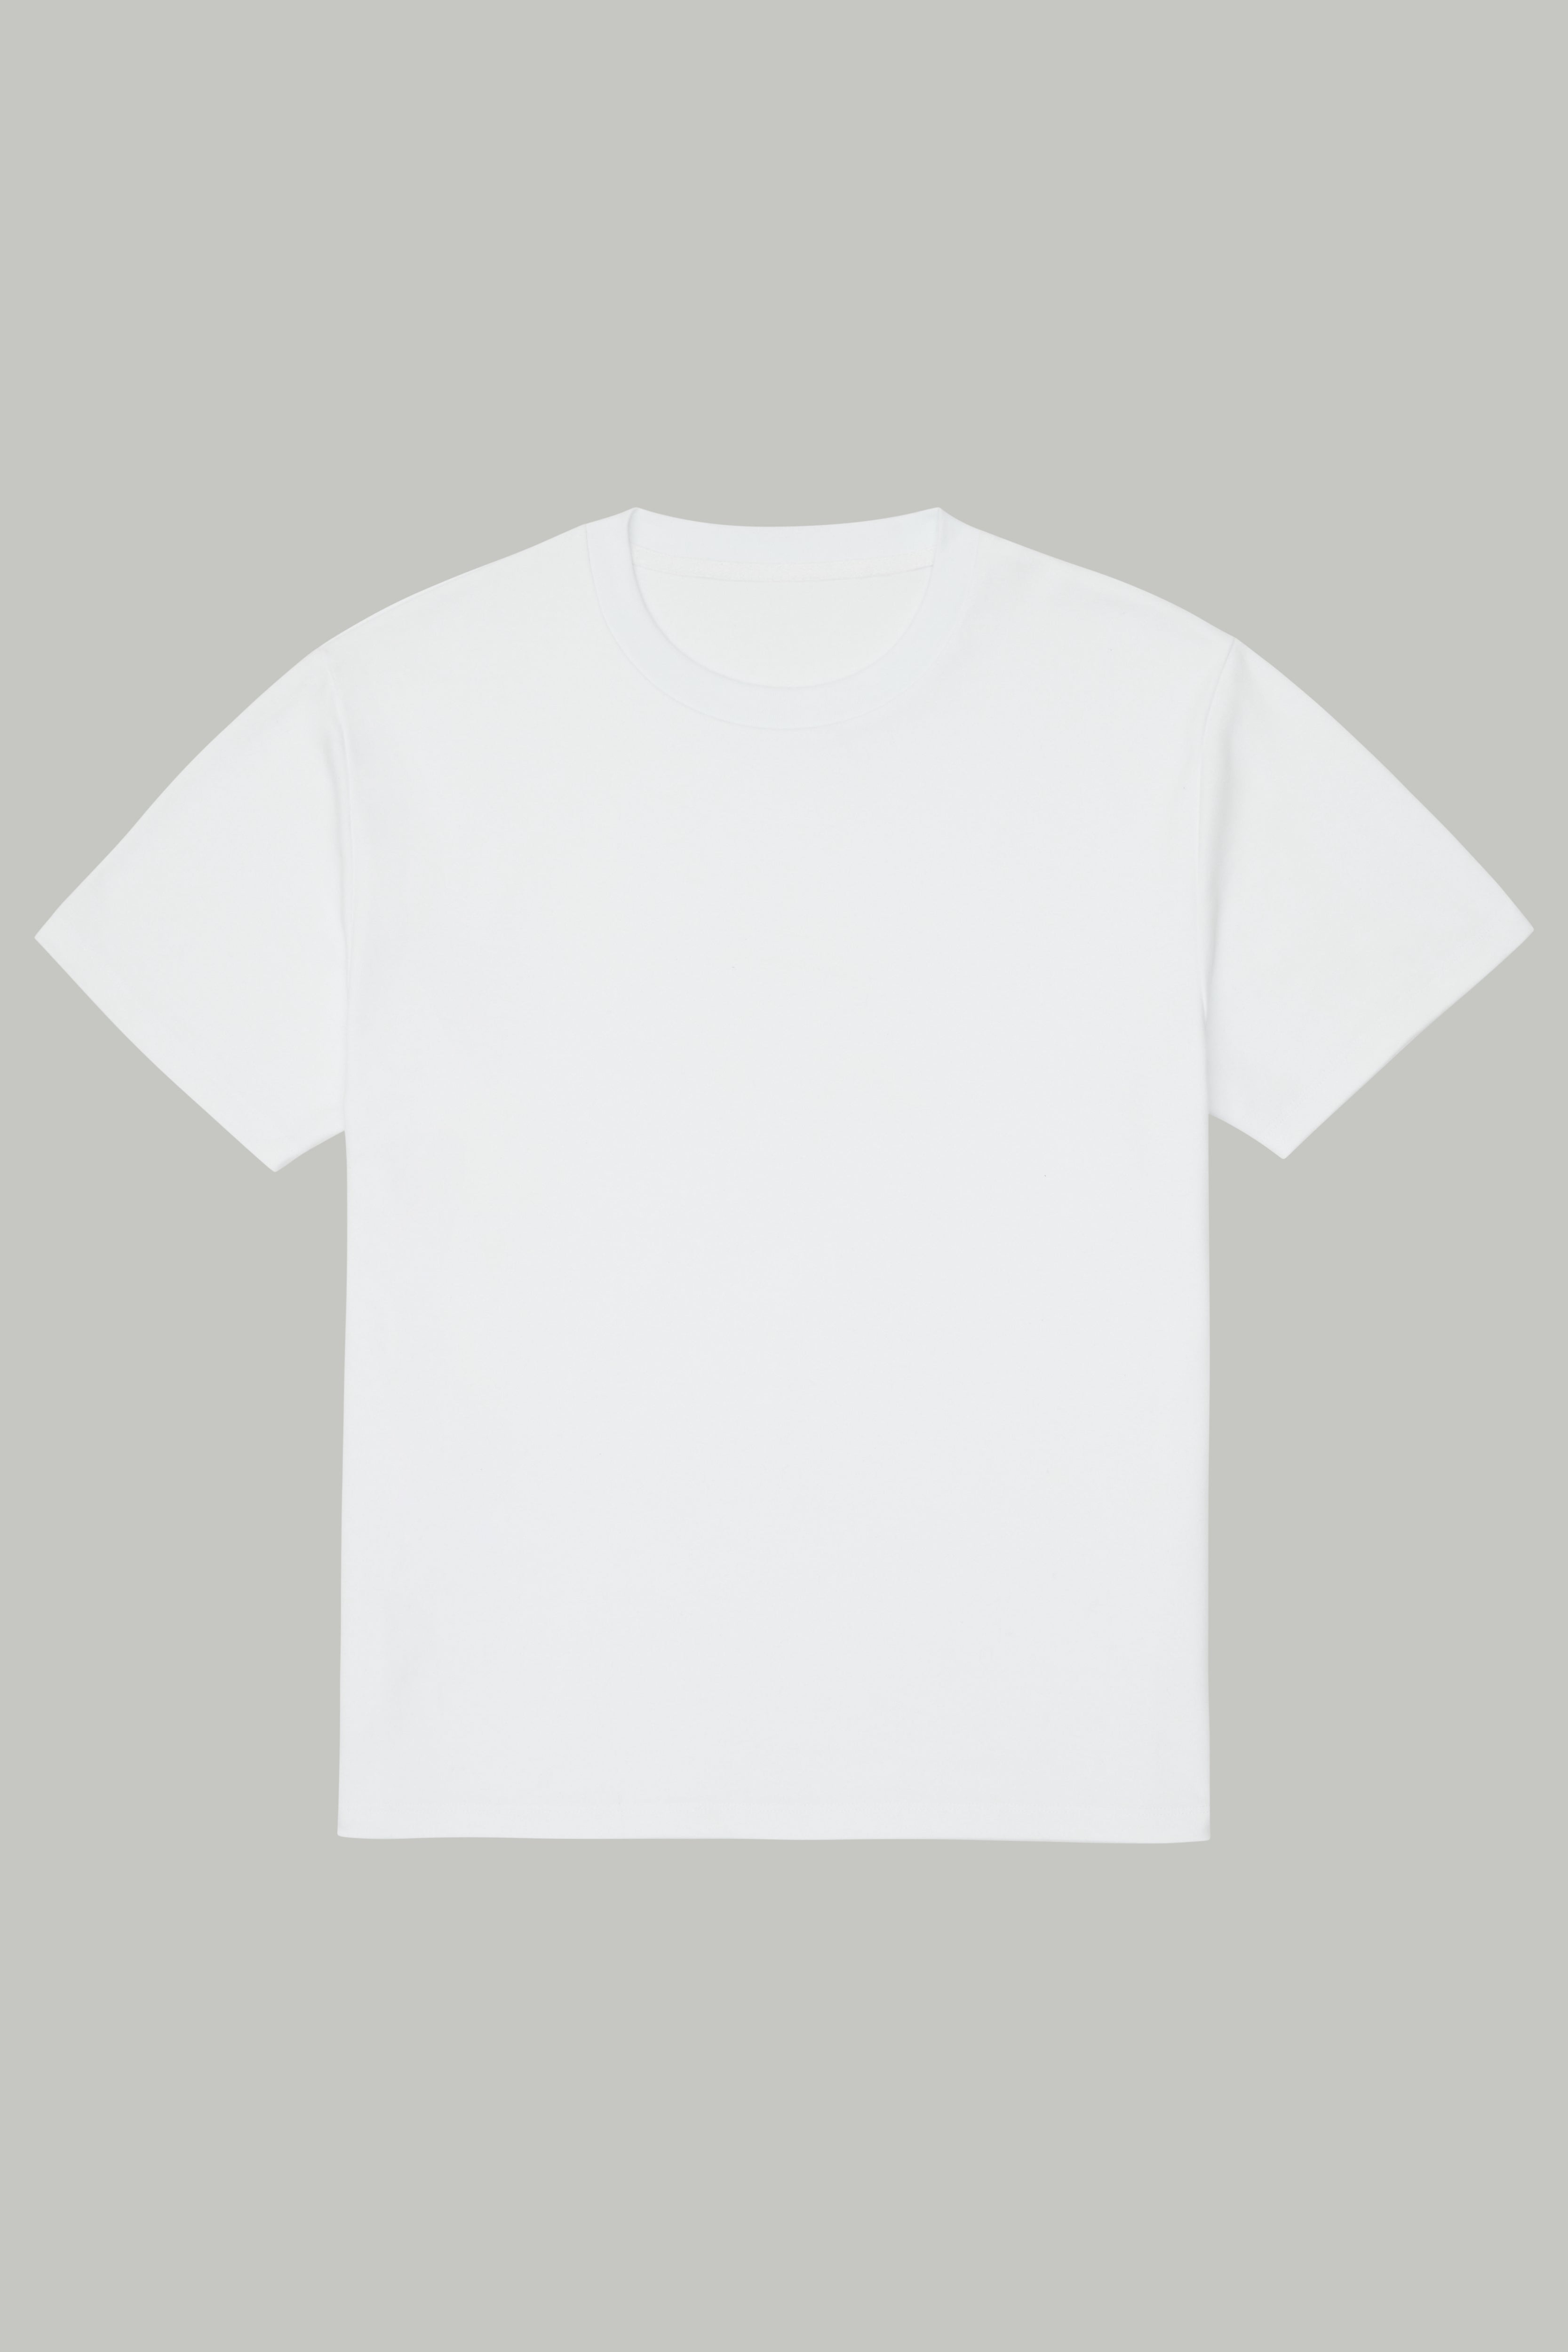 T-shirt TS1 Sample - White